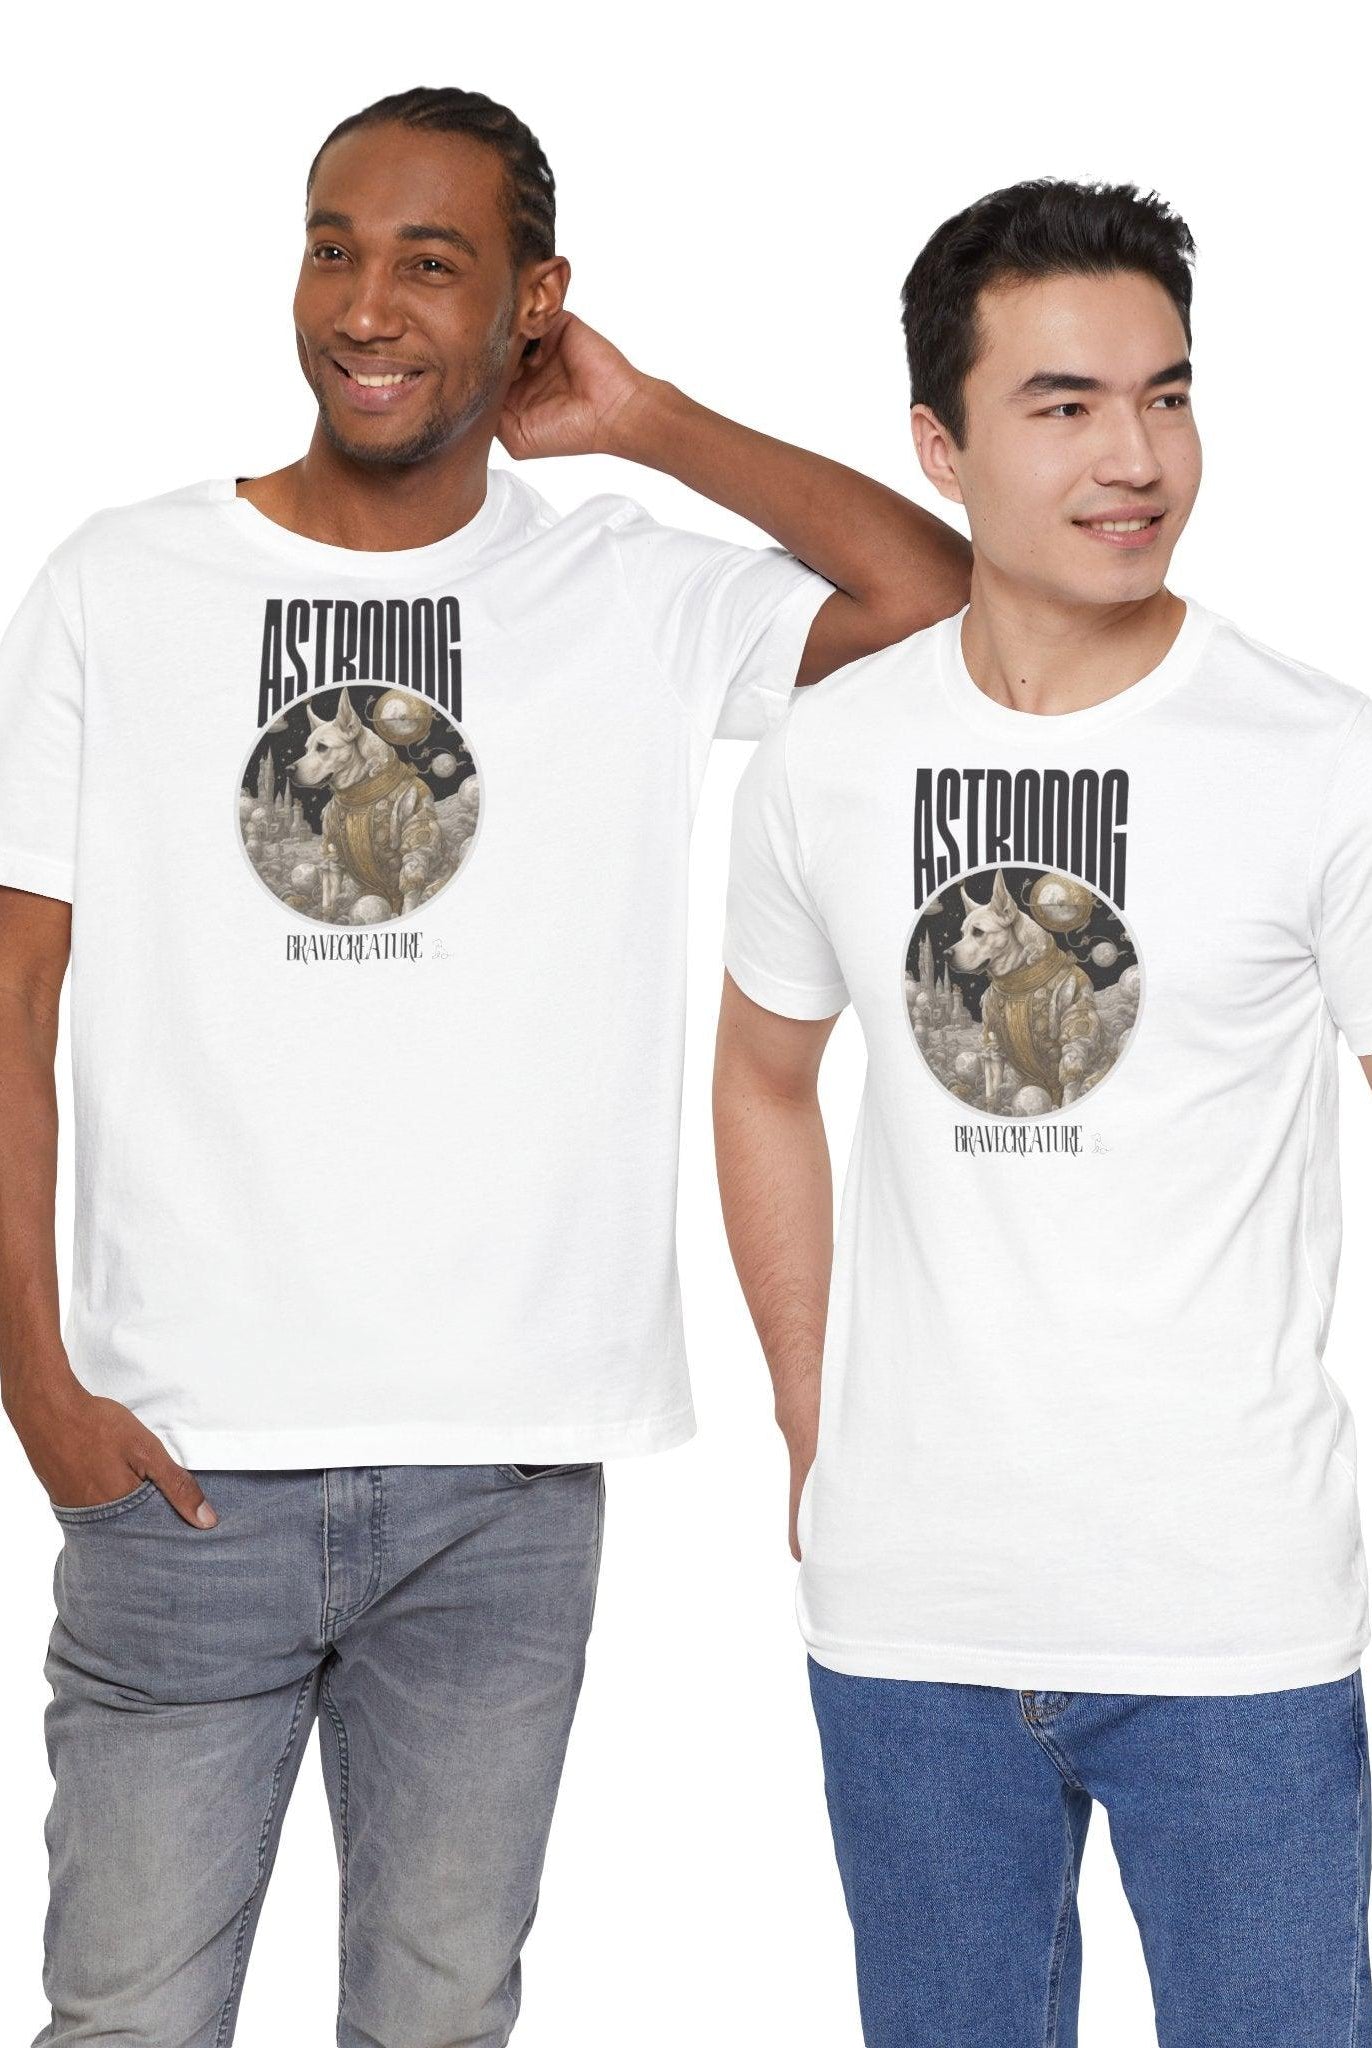 Astrodog - Astronaut - Soulshinecreators - Bella & Canvas - EU - Soulshinecreators